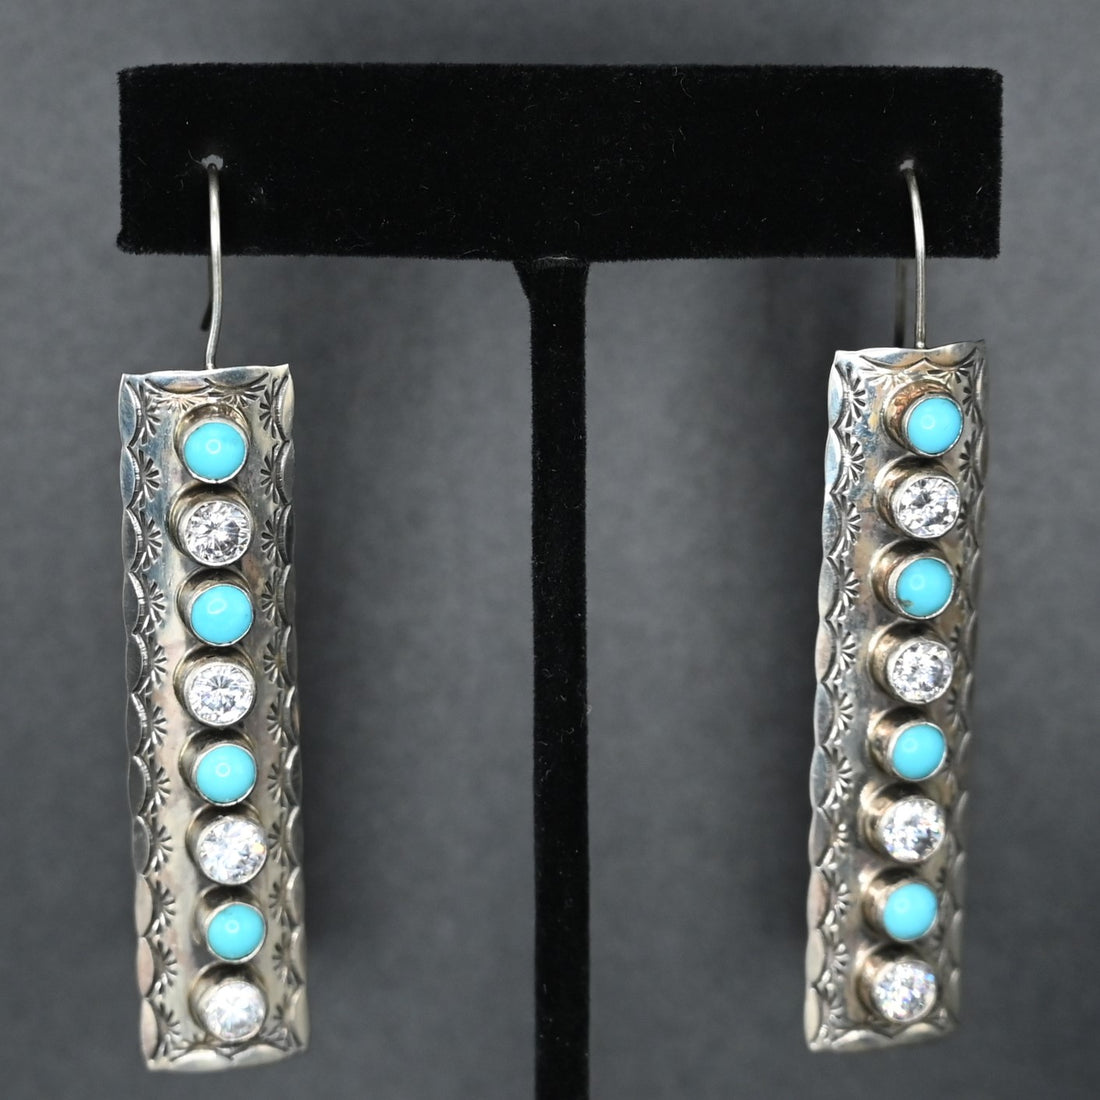 KingmanTurq and Silver Long Rectangle Earrings view of earrings